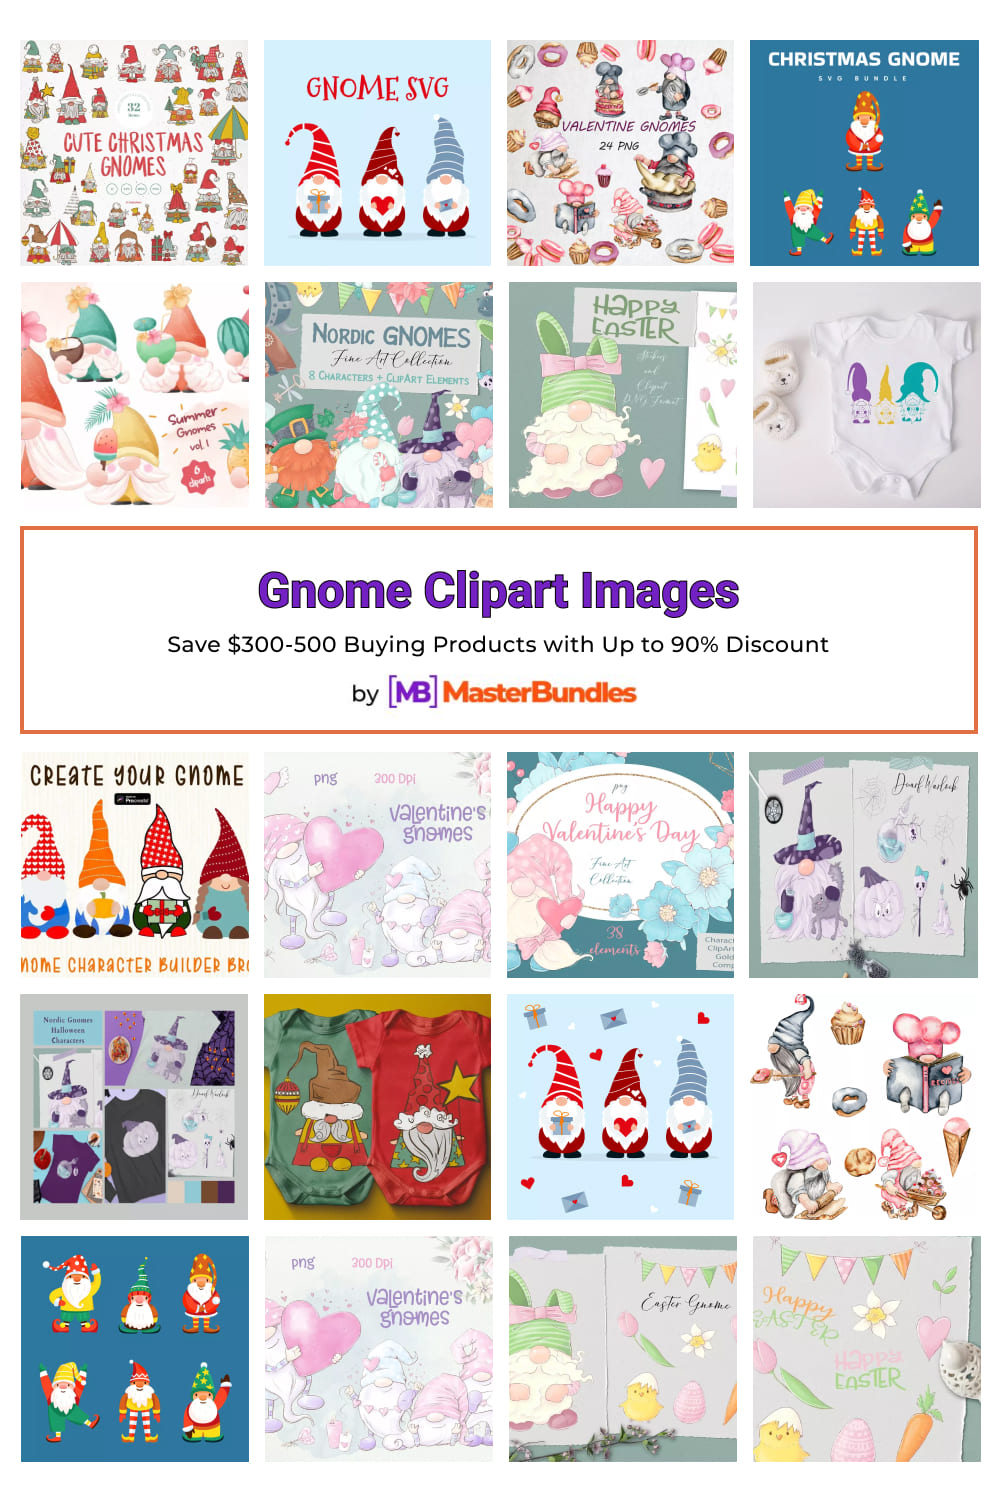 Gnome Clipart Images Pinterest image.